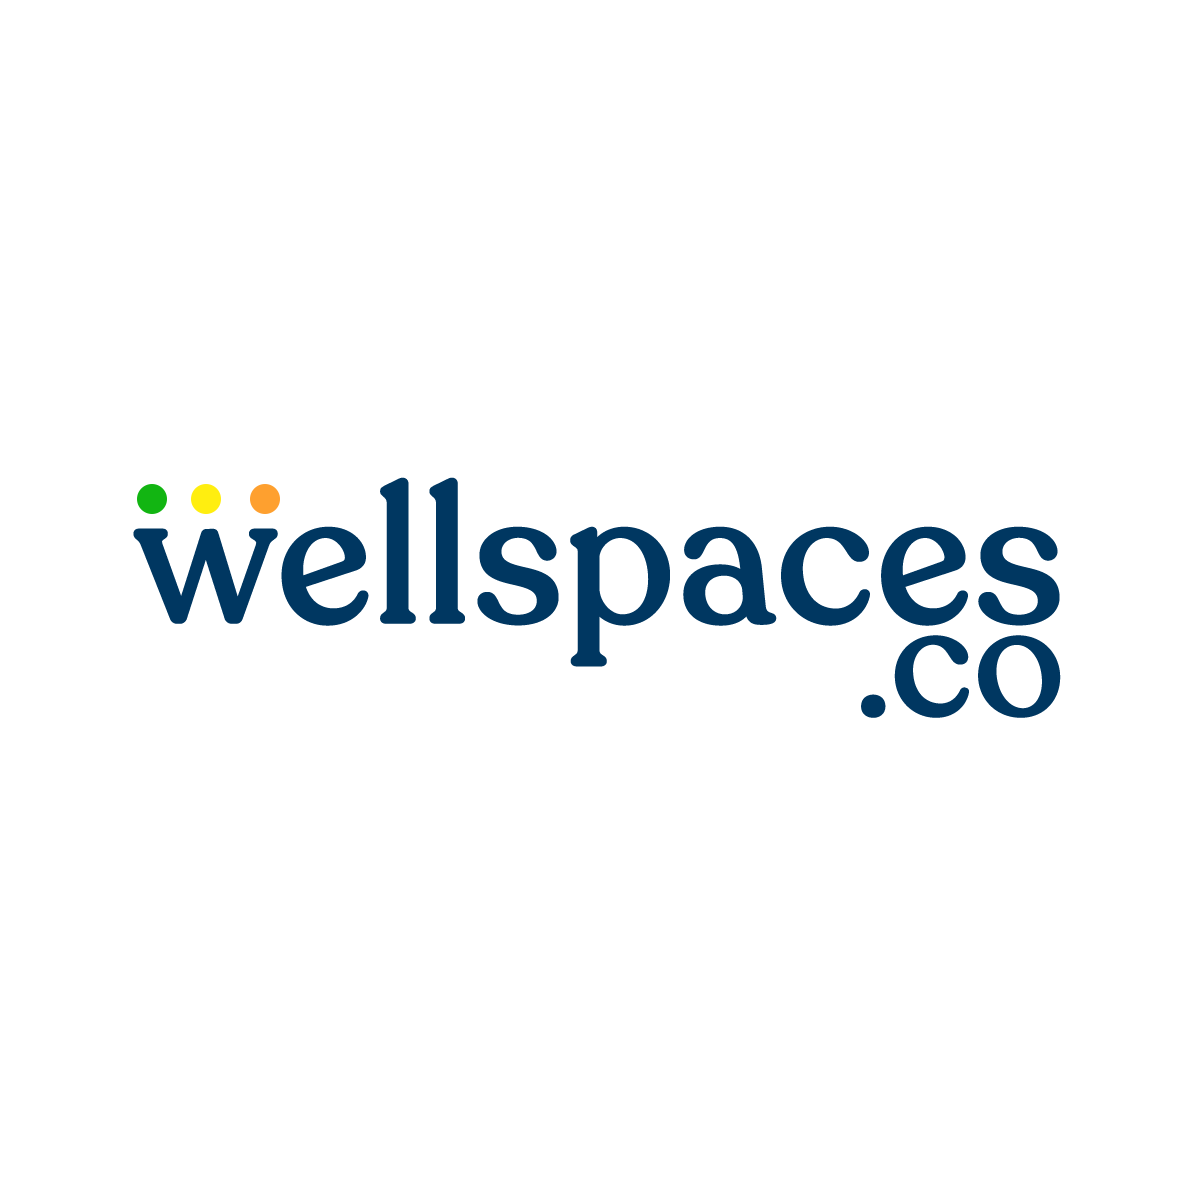 wellspaces.co